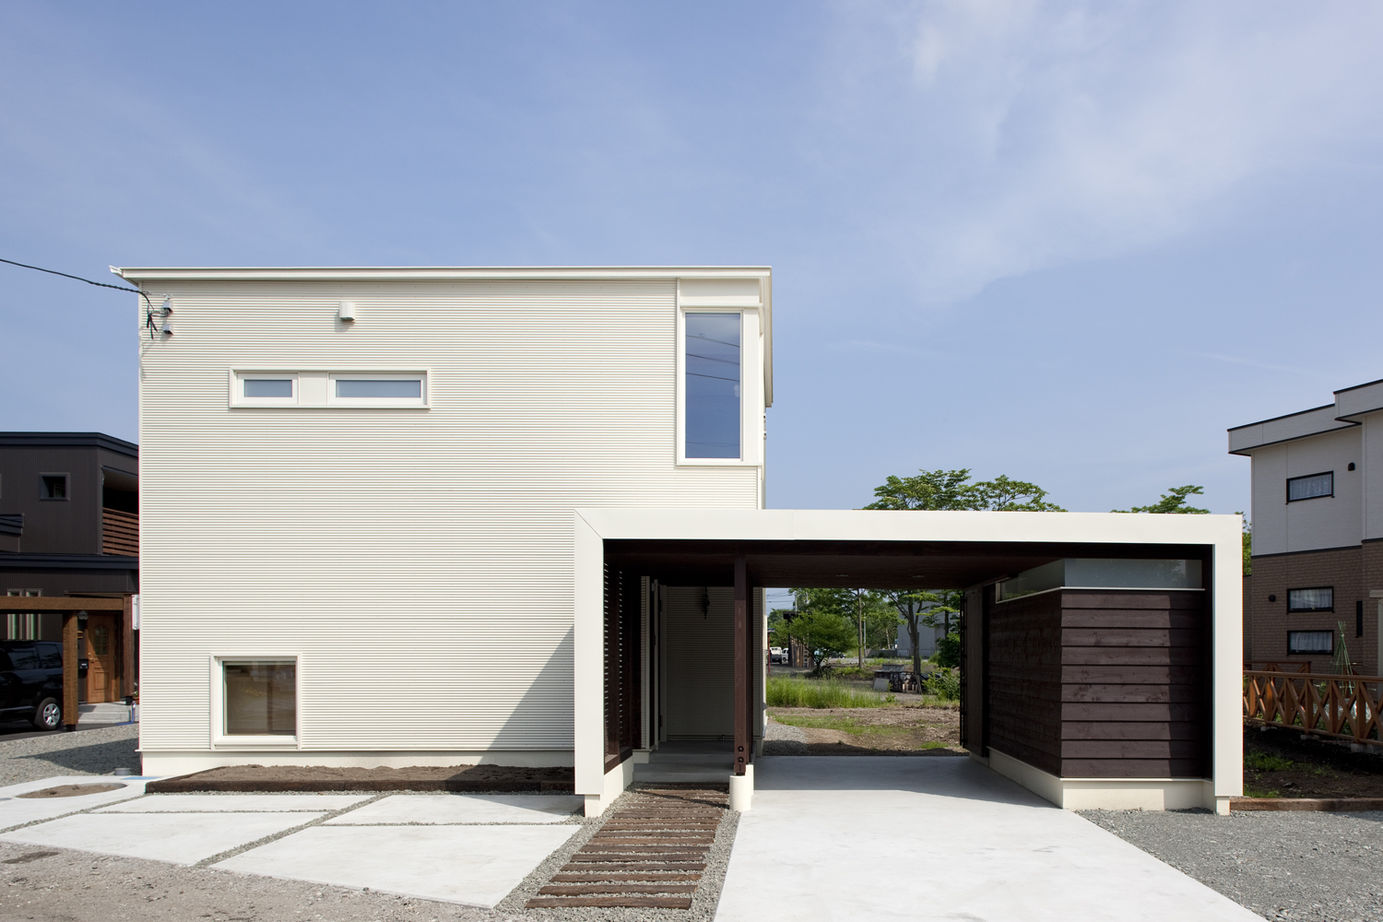 Suumo 3500万円 外観に調和した造作カーポートのある家 アートホーム の建築実例詳細 注文住宅